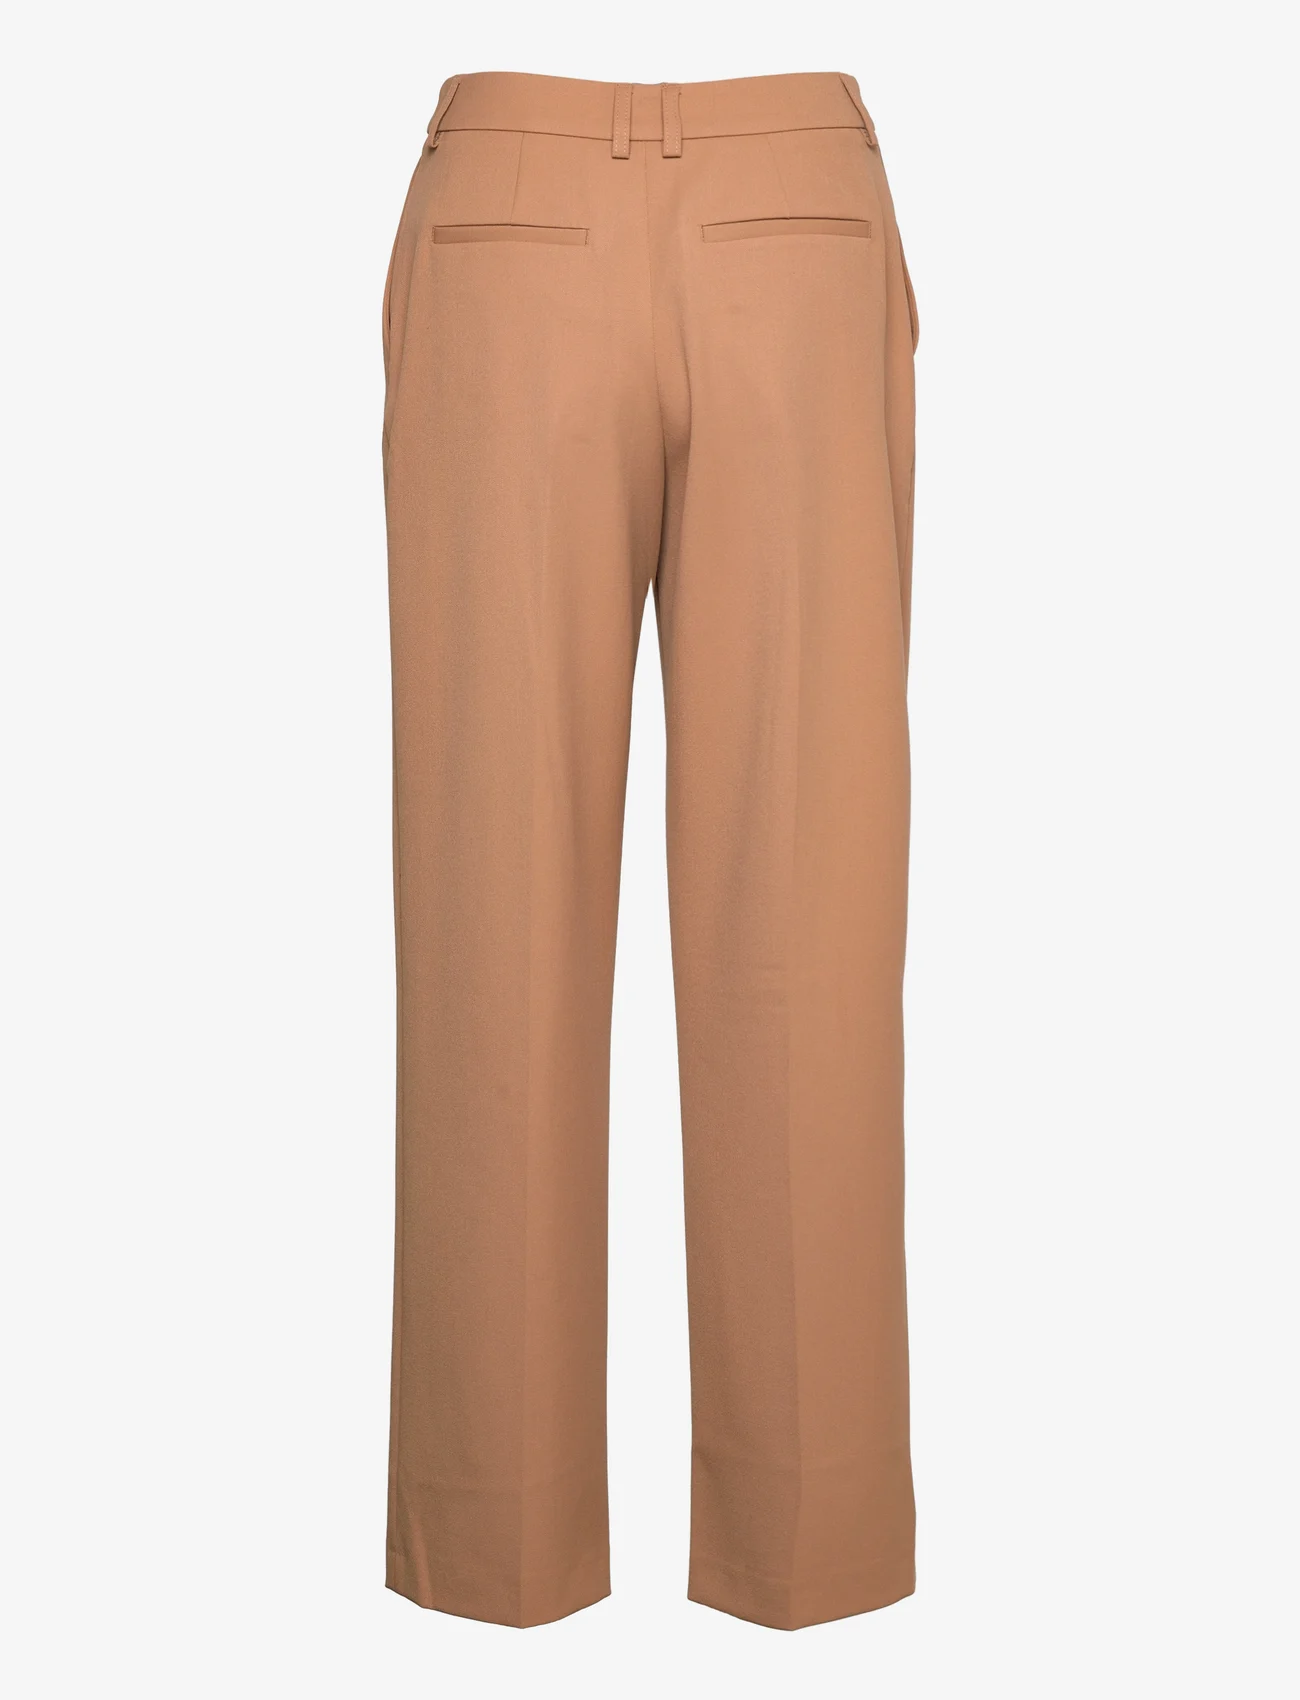 Samsøe Samsøe - Paola trousers 13103 - puvunhousut - brown sugar - 1